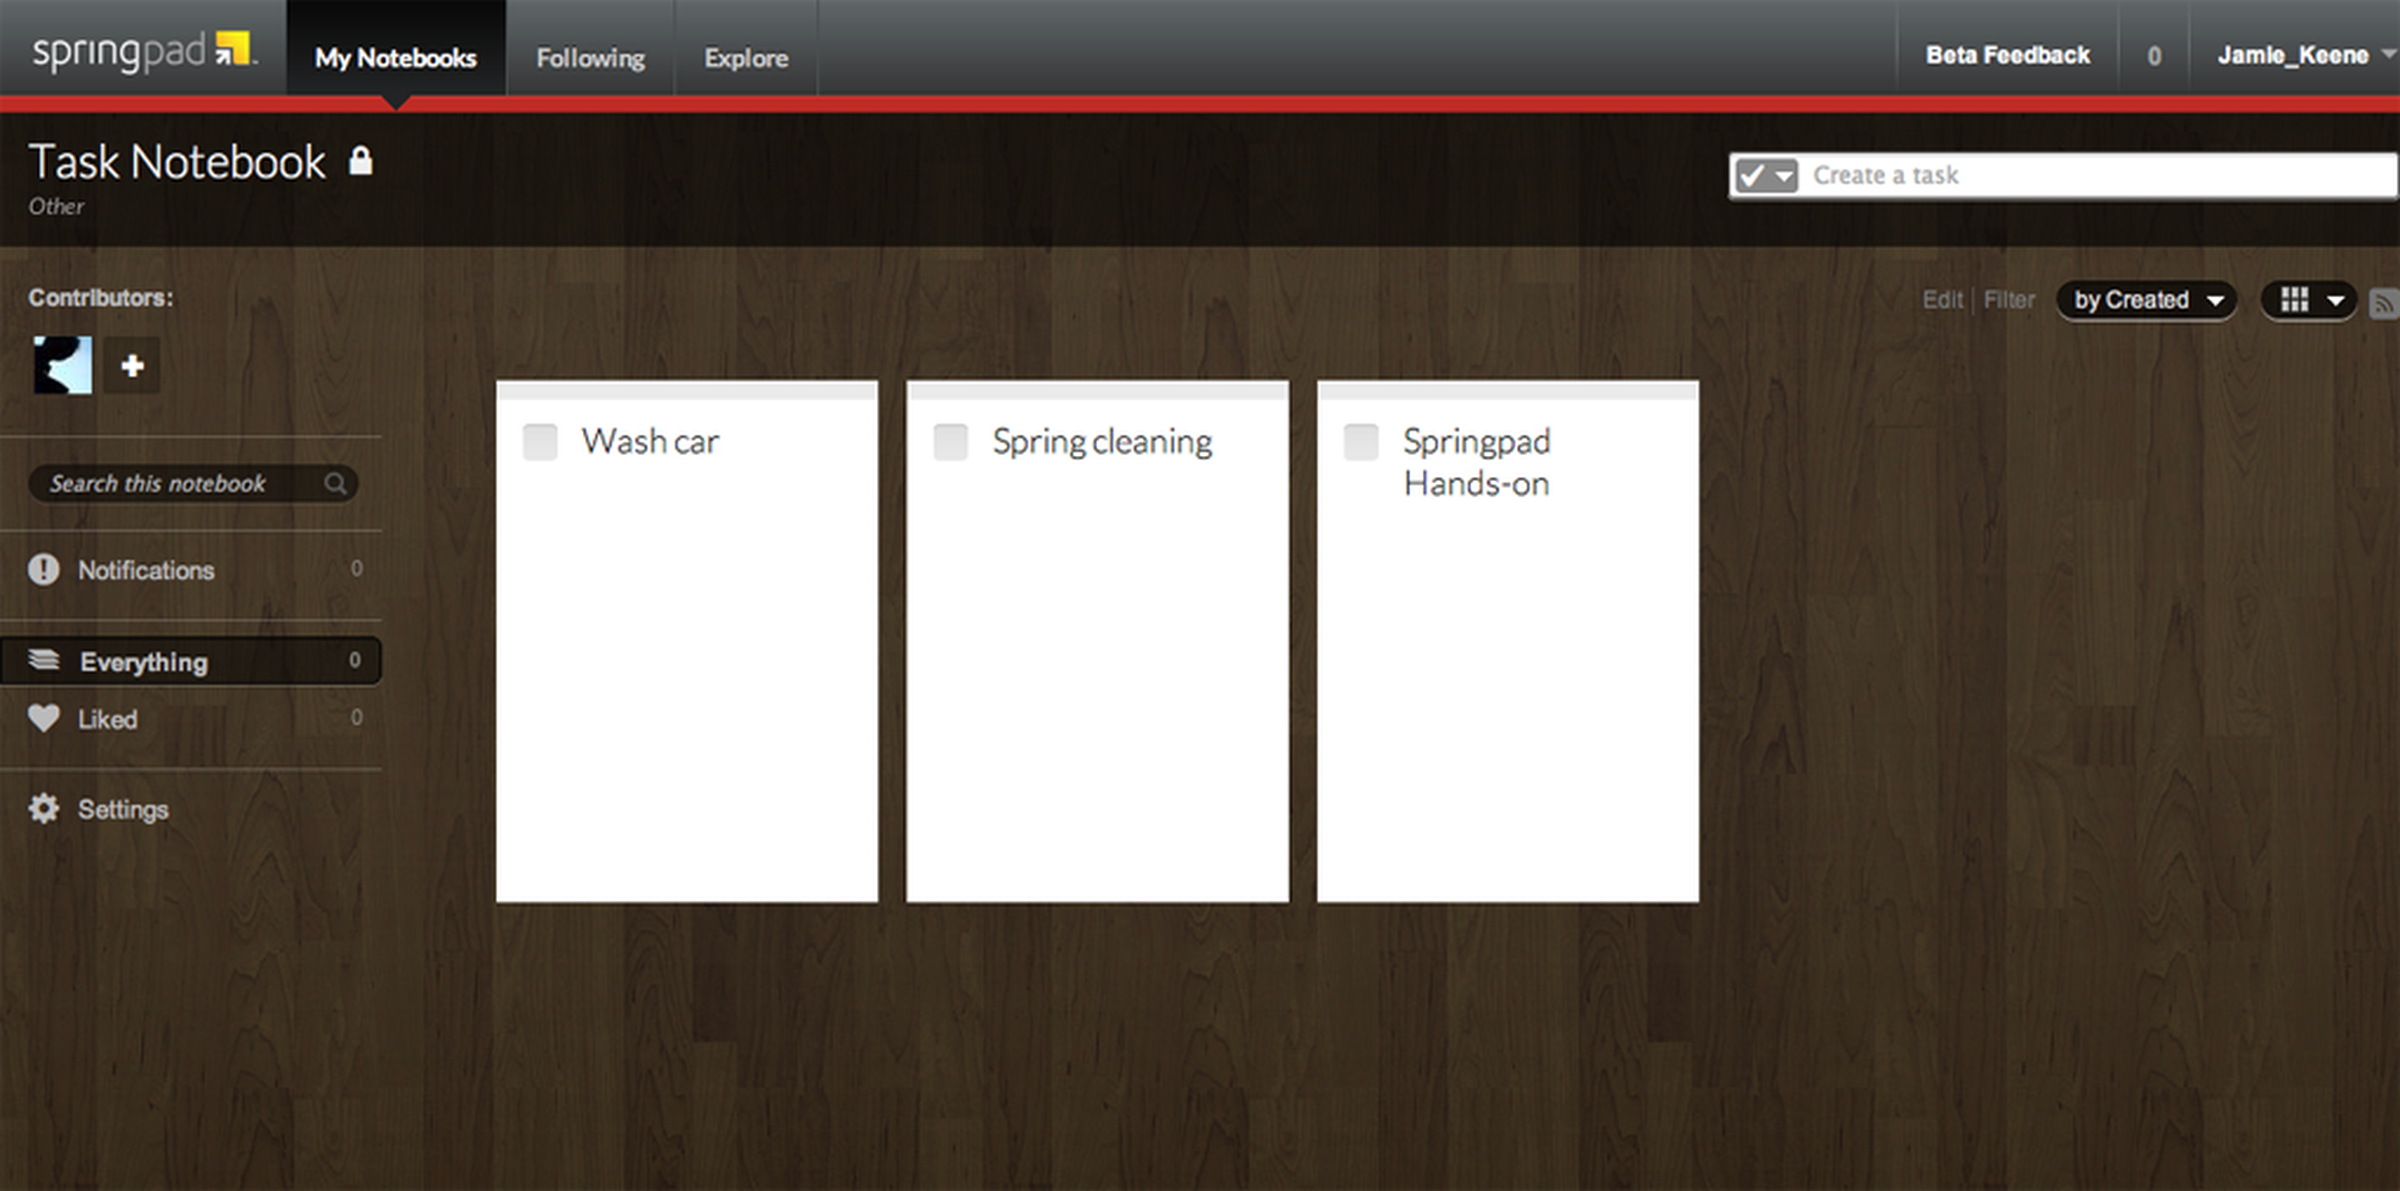 Springpad 3.0 web interface screenshots